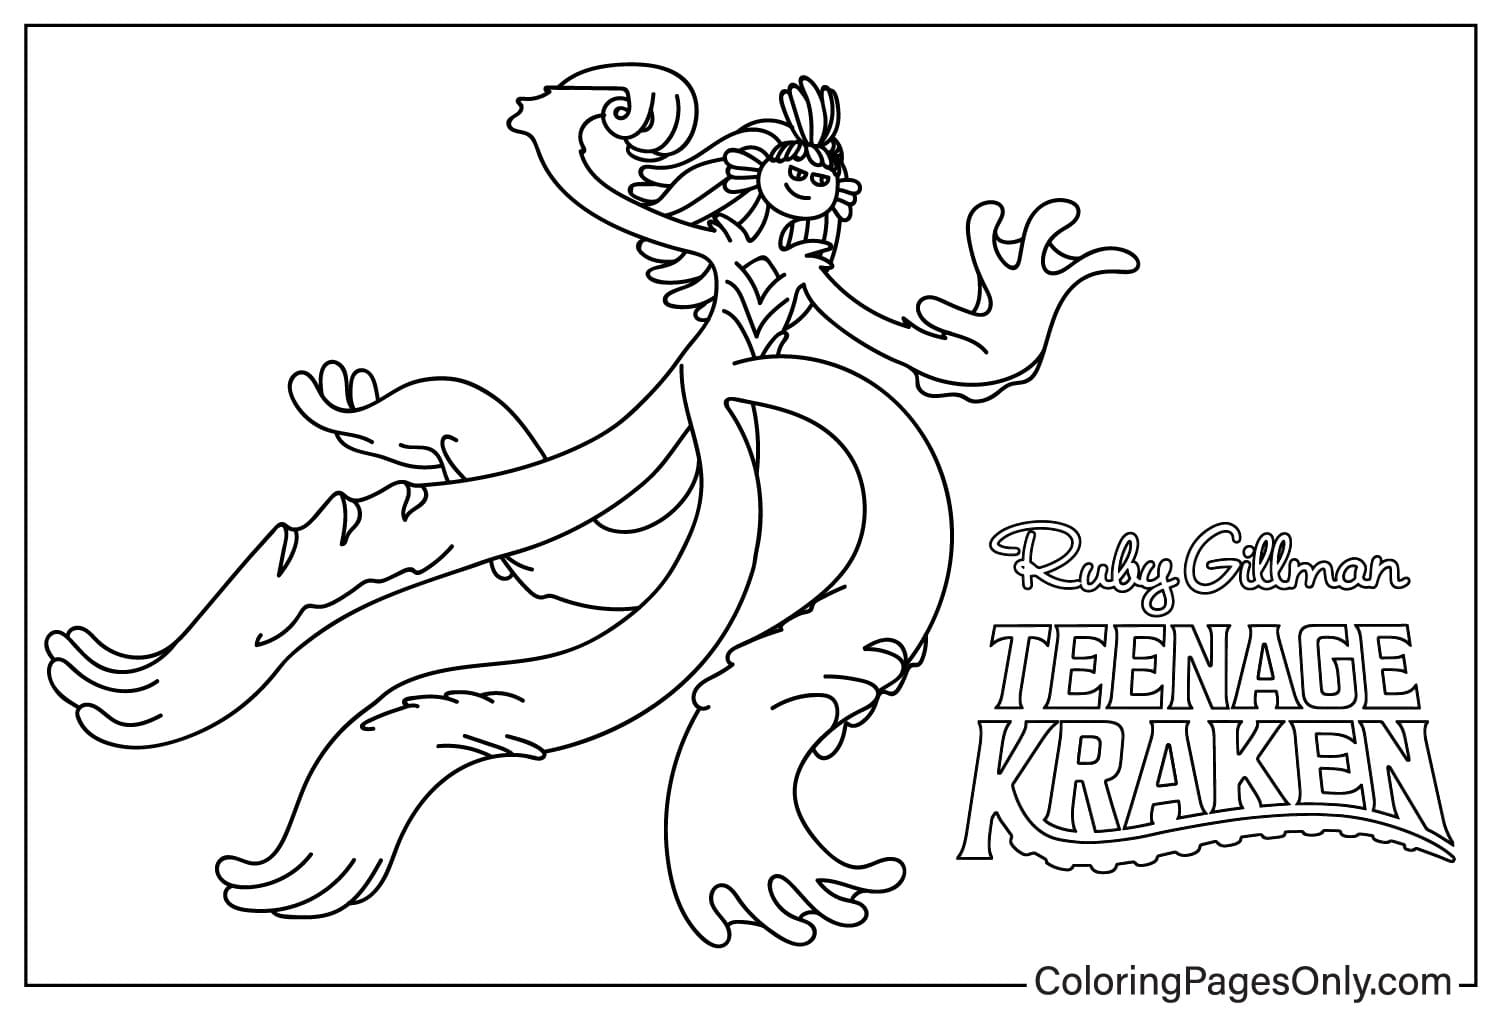 Página para colorir de Agatha Gillman de Ruby Gillman Teenage Kraken